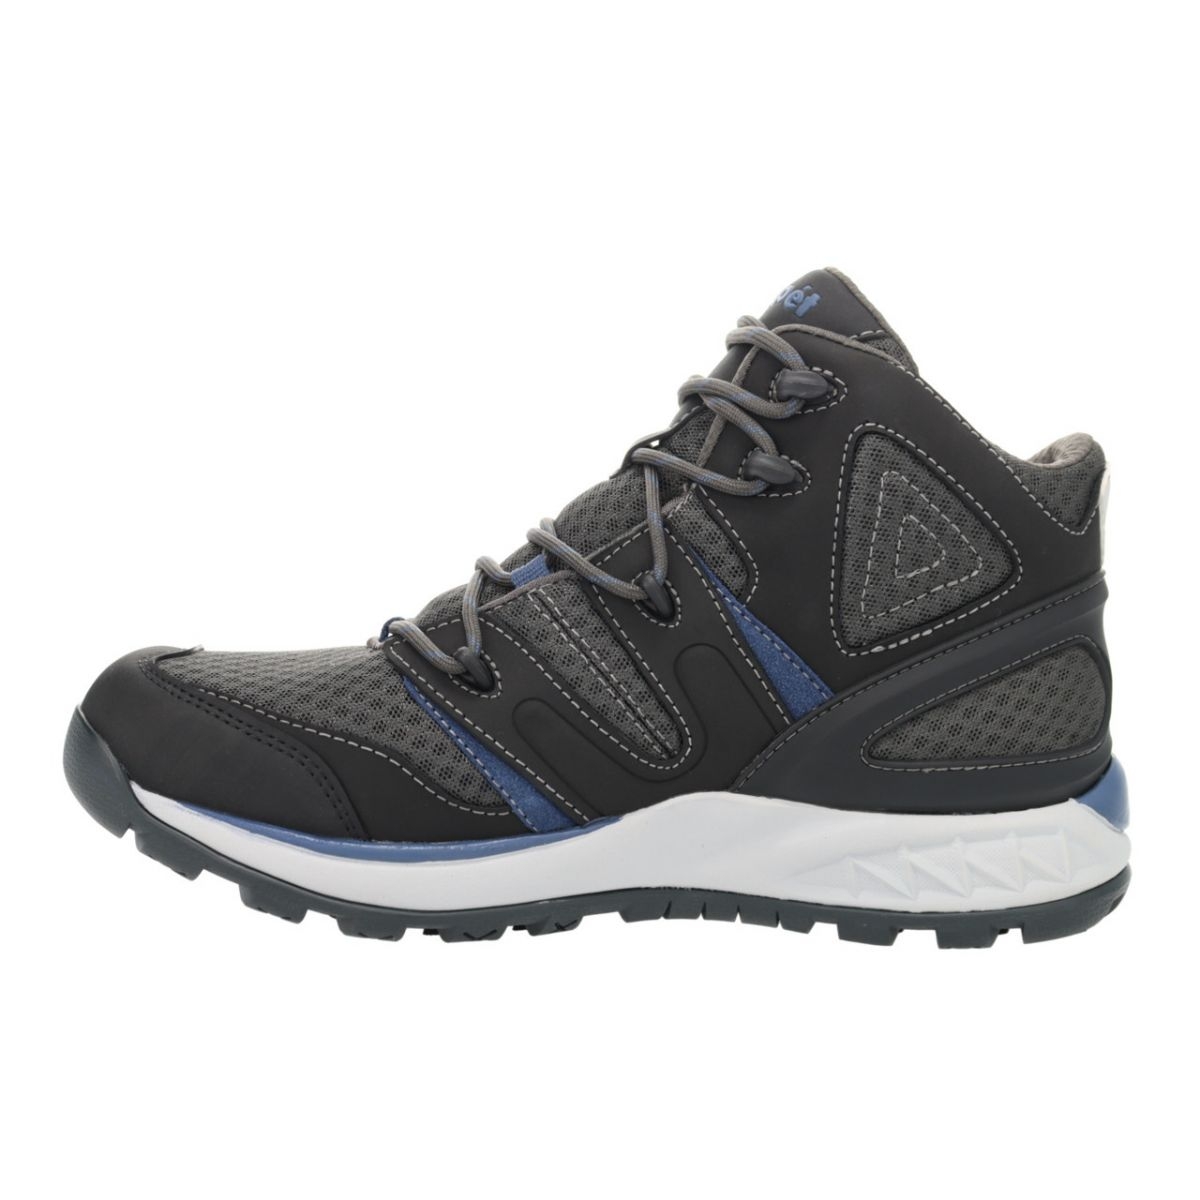 Propet Men's Veymont Waterproof Hiking Boot Grey/Blue - MOA022SGRB GREY/BLUE - GREY/BLUE, 11.5 X-Wide